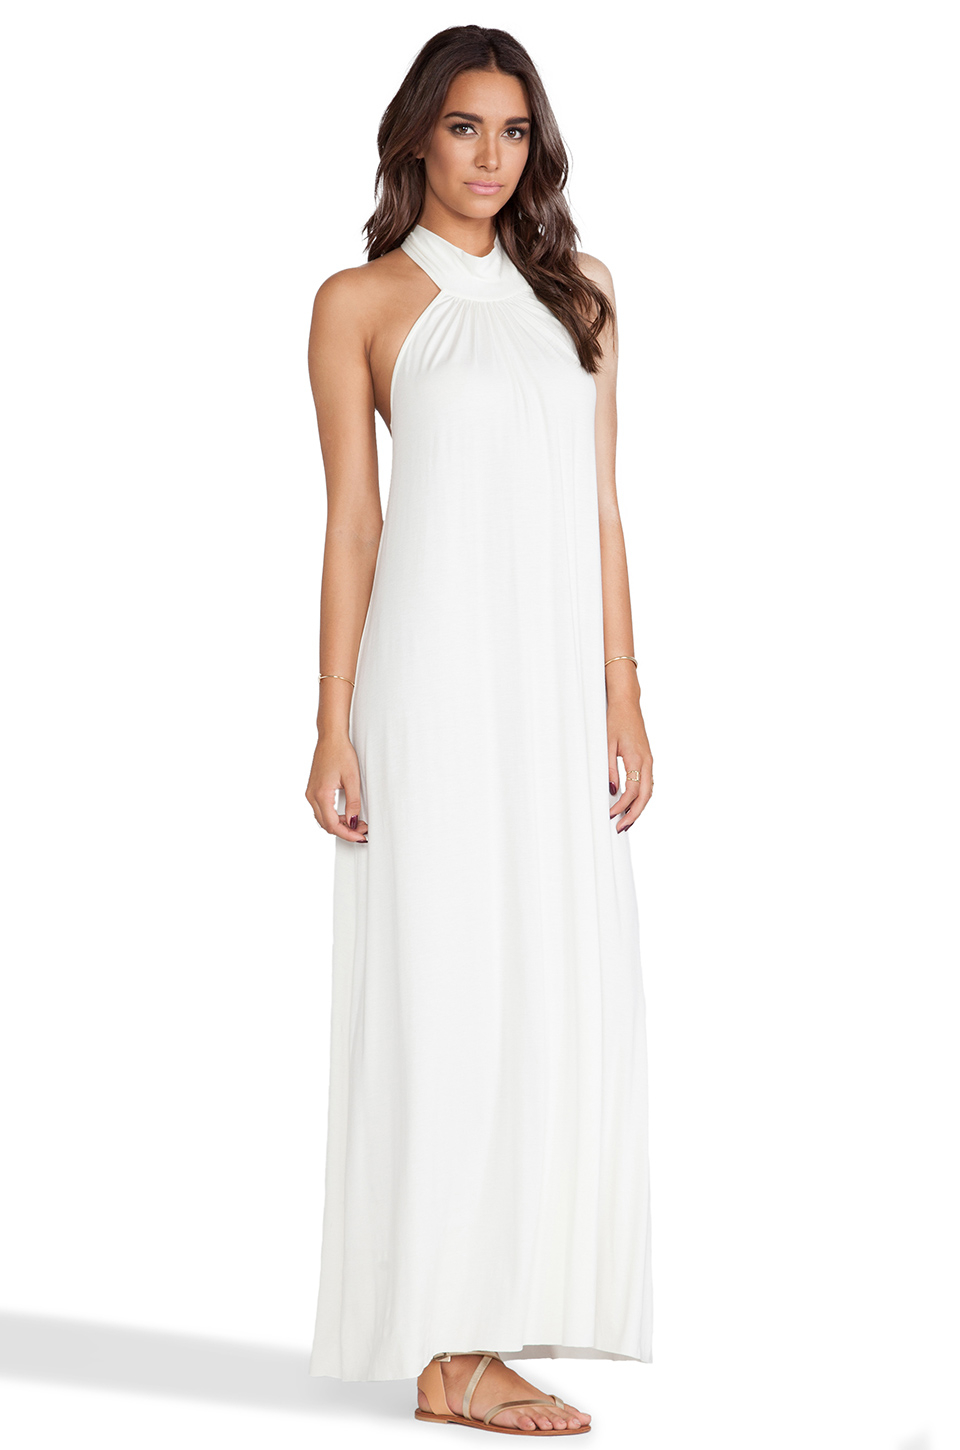 Lyst - Rachel Pally Shu Maxi Dress in White